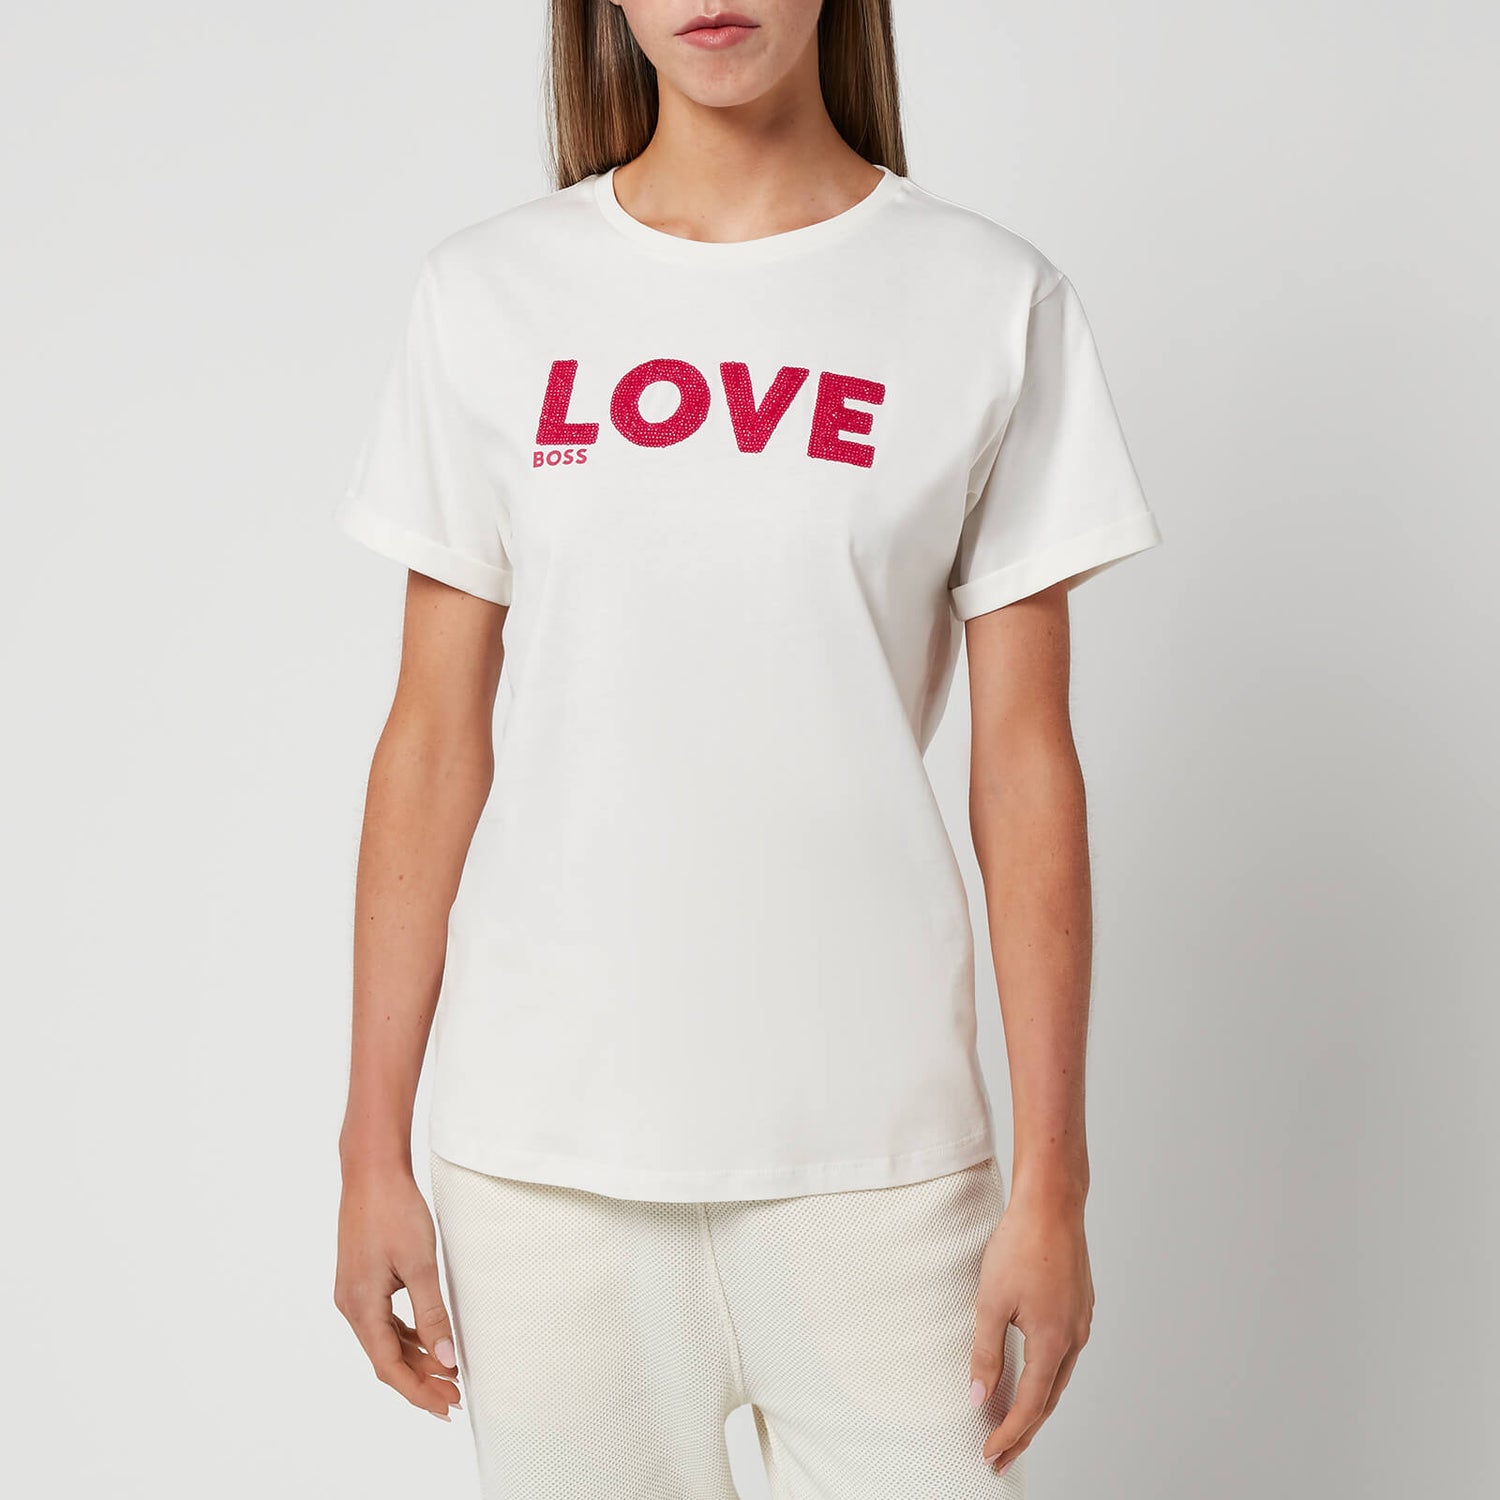 BOSS Women's Elinea Vd T-Shirt - Open White - XS